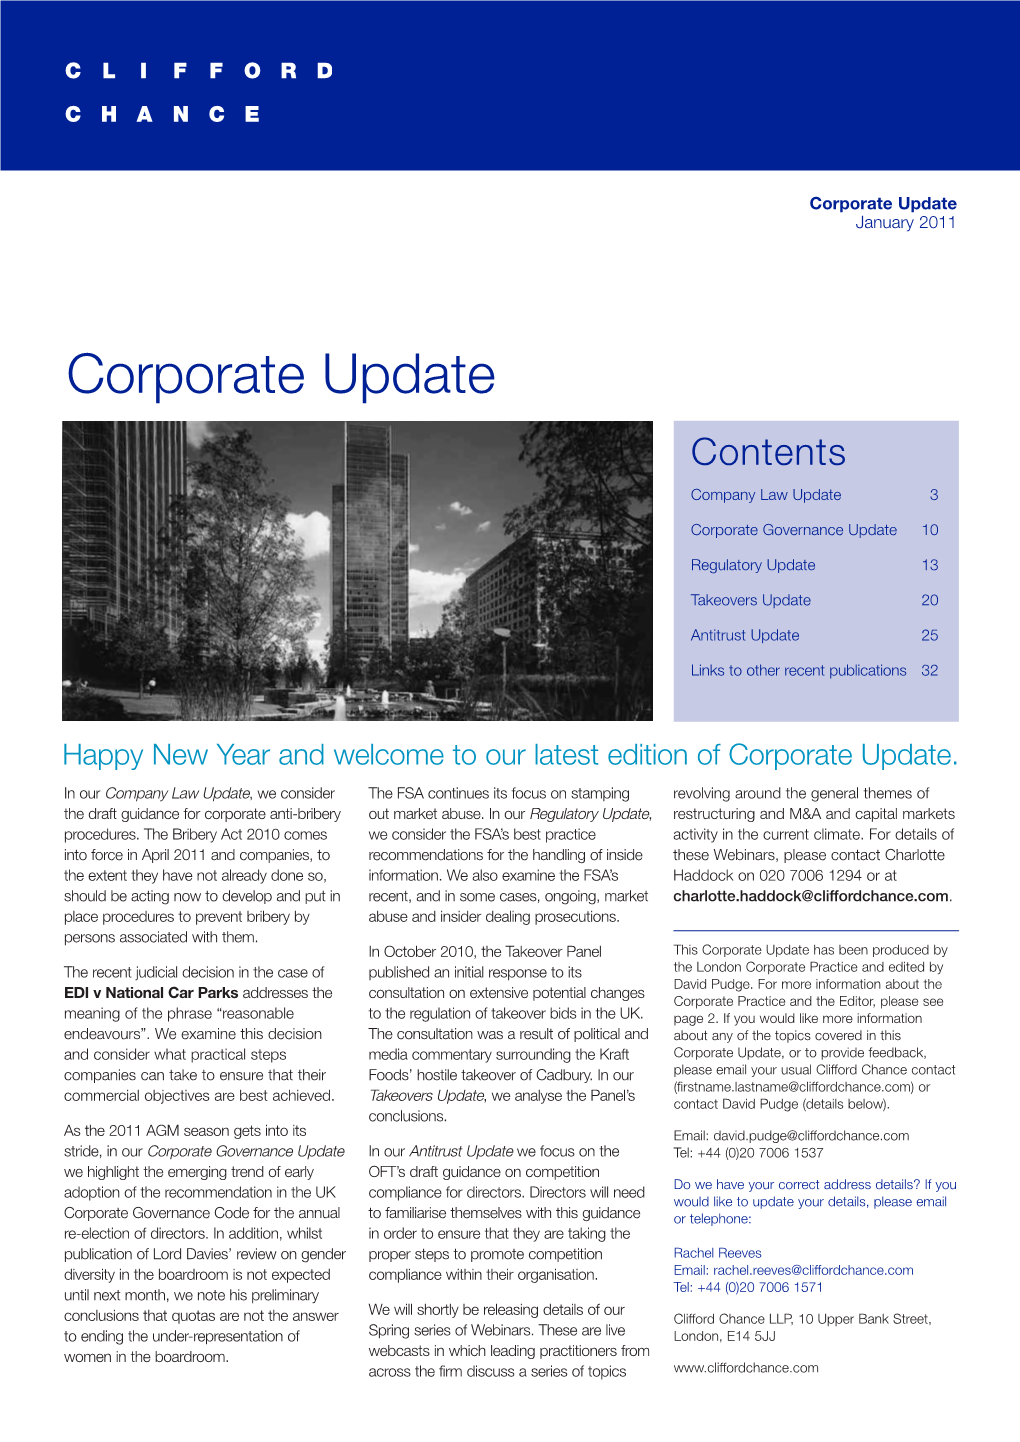 Corporate Update January 2011